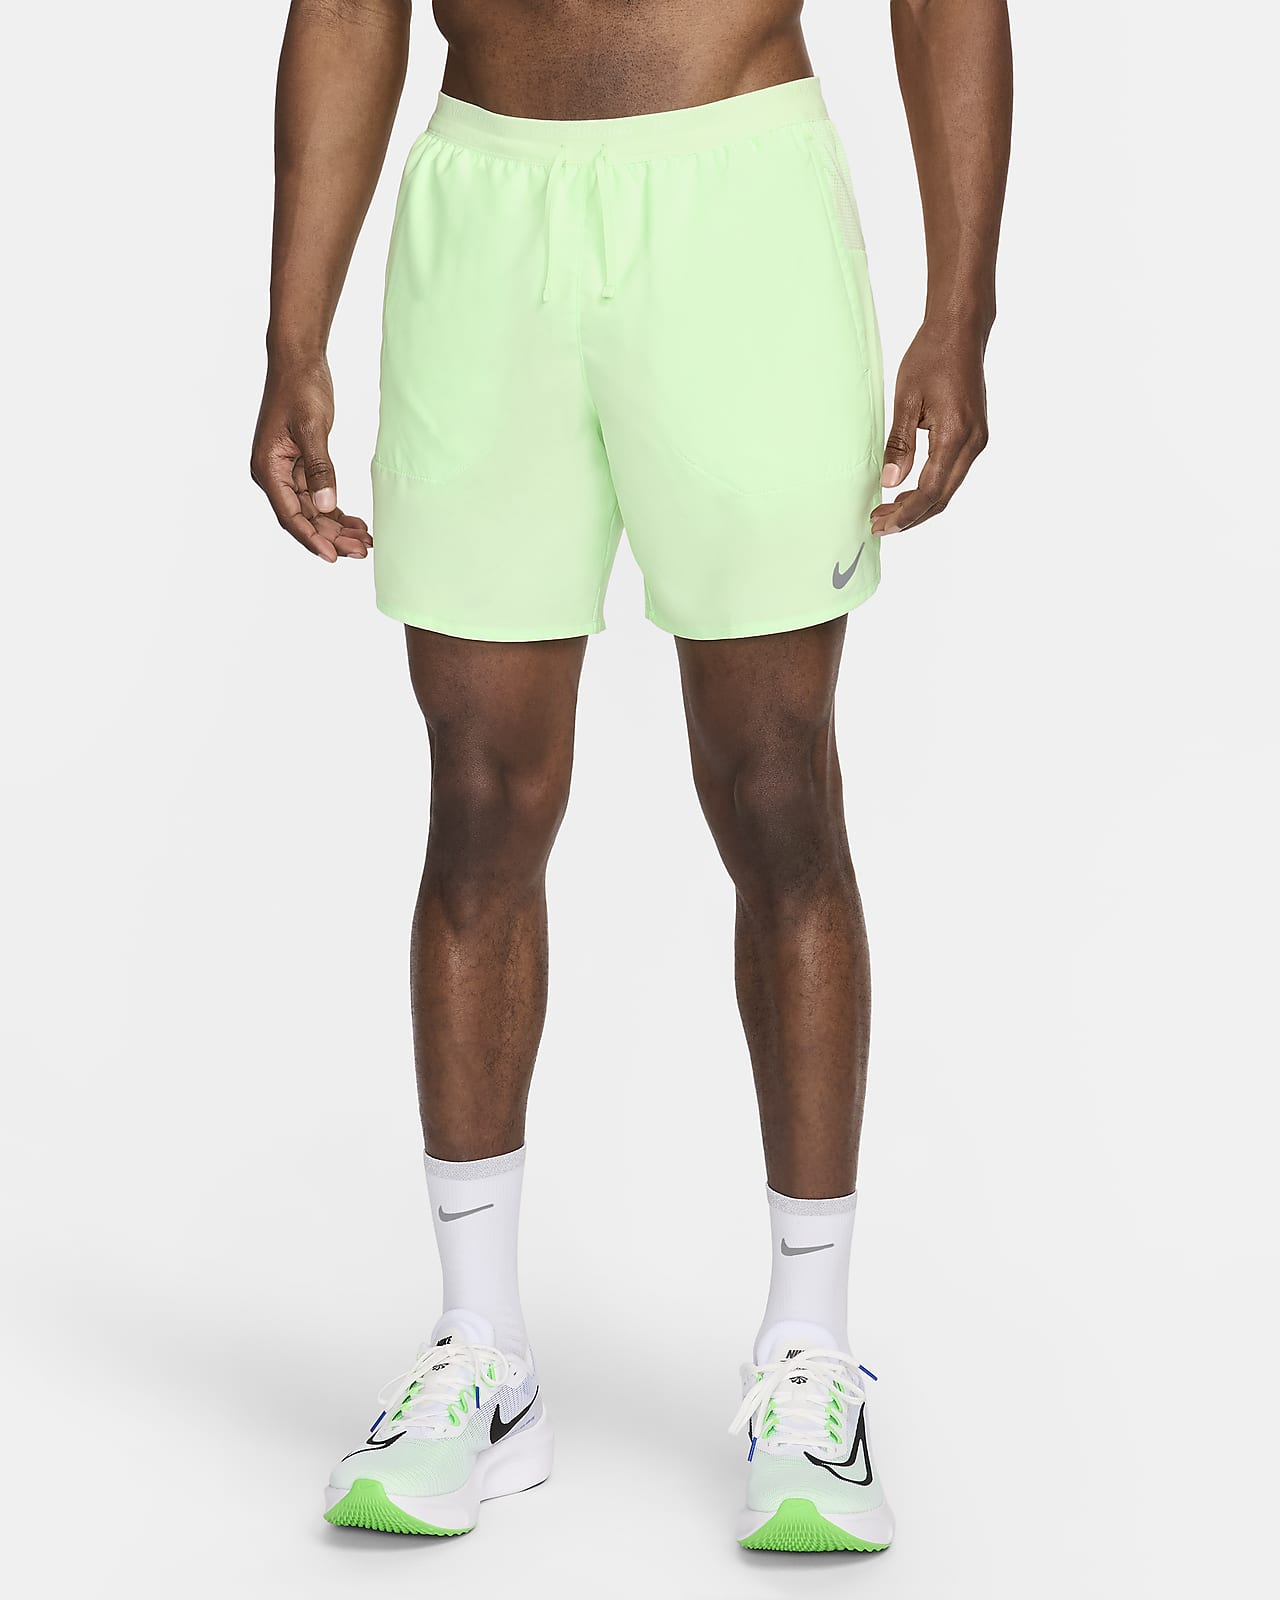 Nike Stride Dri-FIT 18 cm-es, belső rövidnadrággal bélelt férfi futórövidnadrág